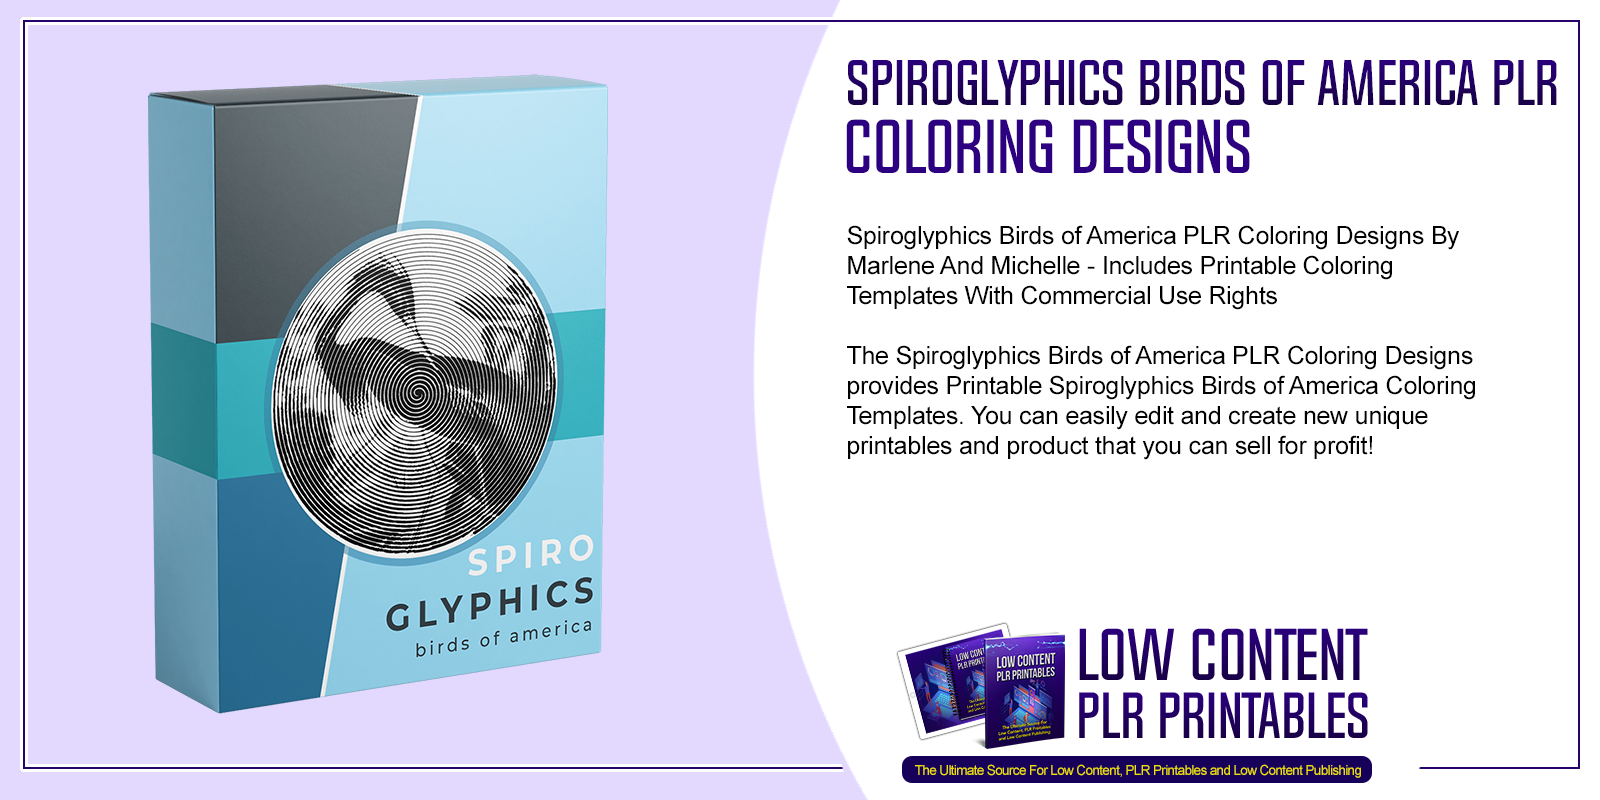 Spiroglyphics Birds of America PLR Coloring Designs